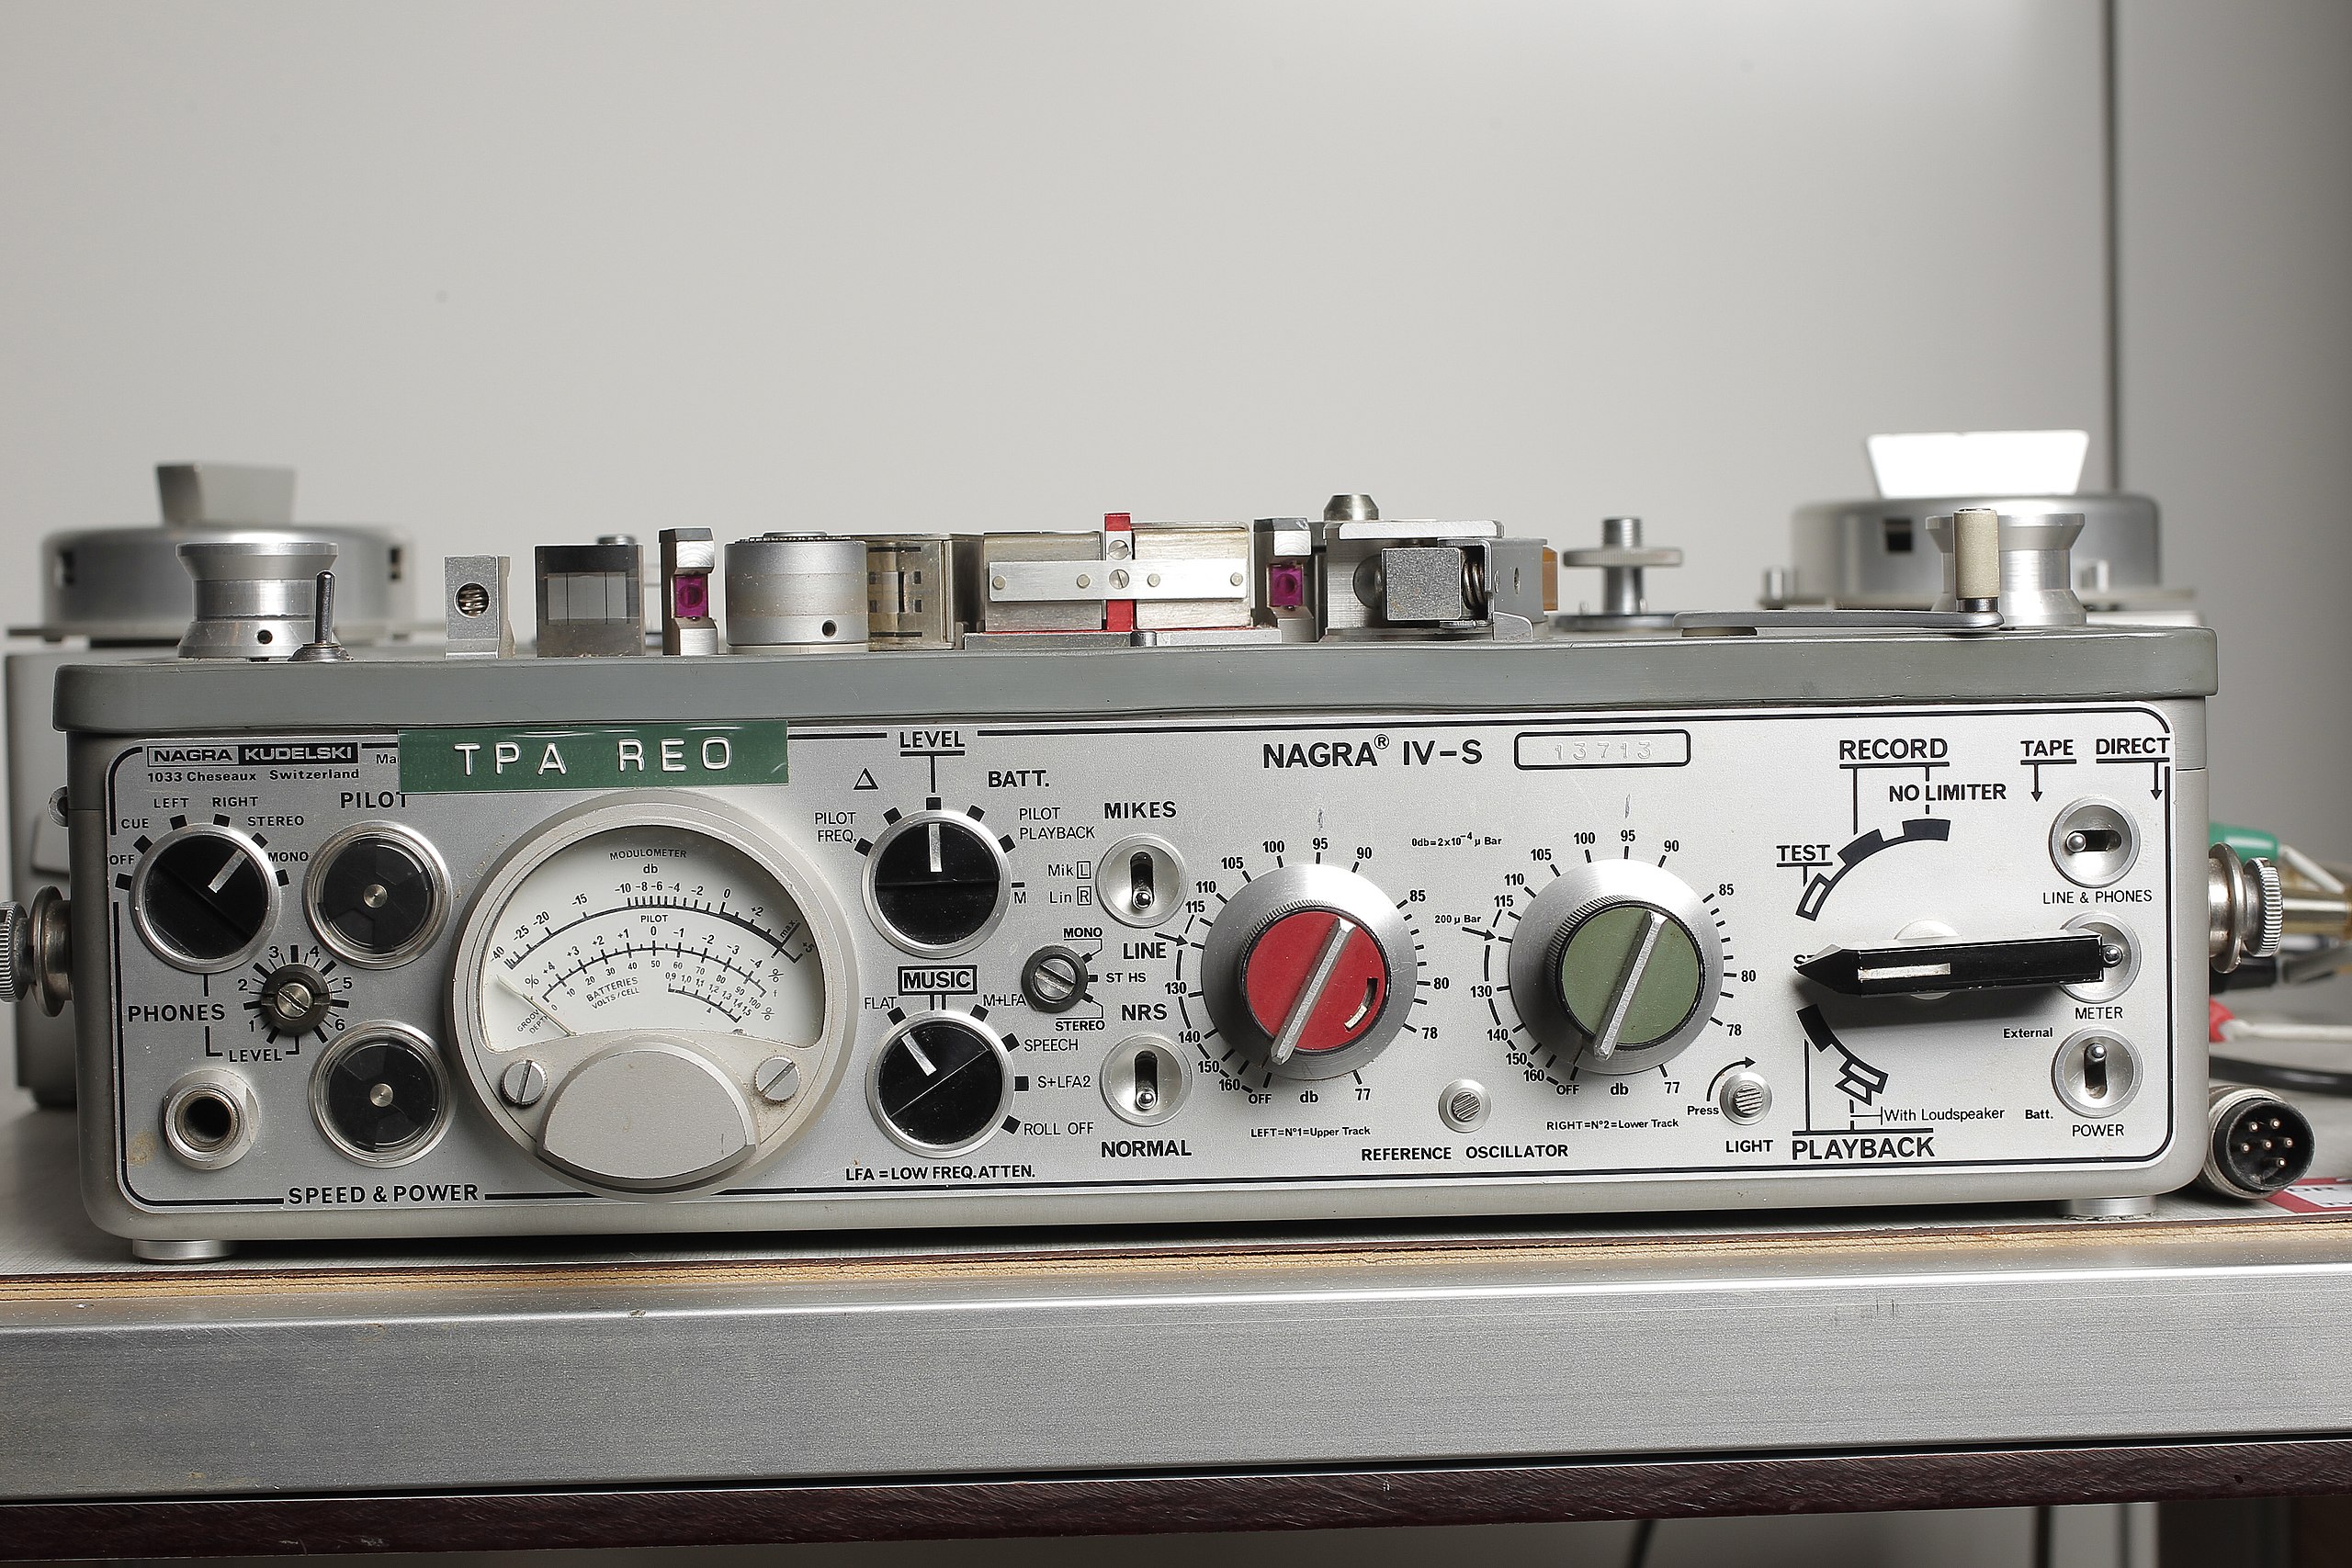 File:Nagra IV-S tape recorder (6498617805).jpg - Wikimedia Commons